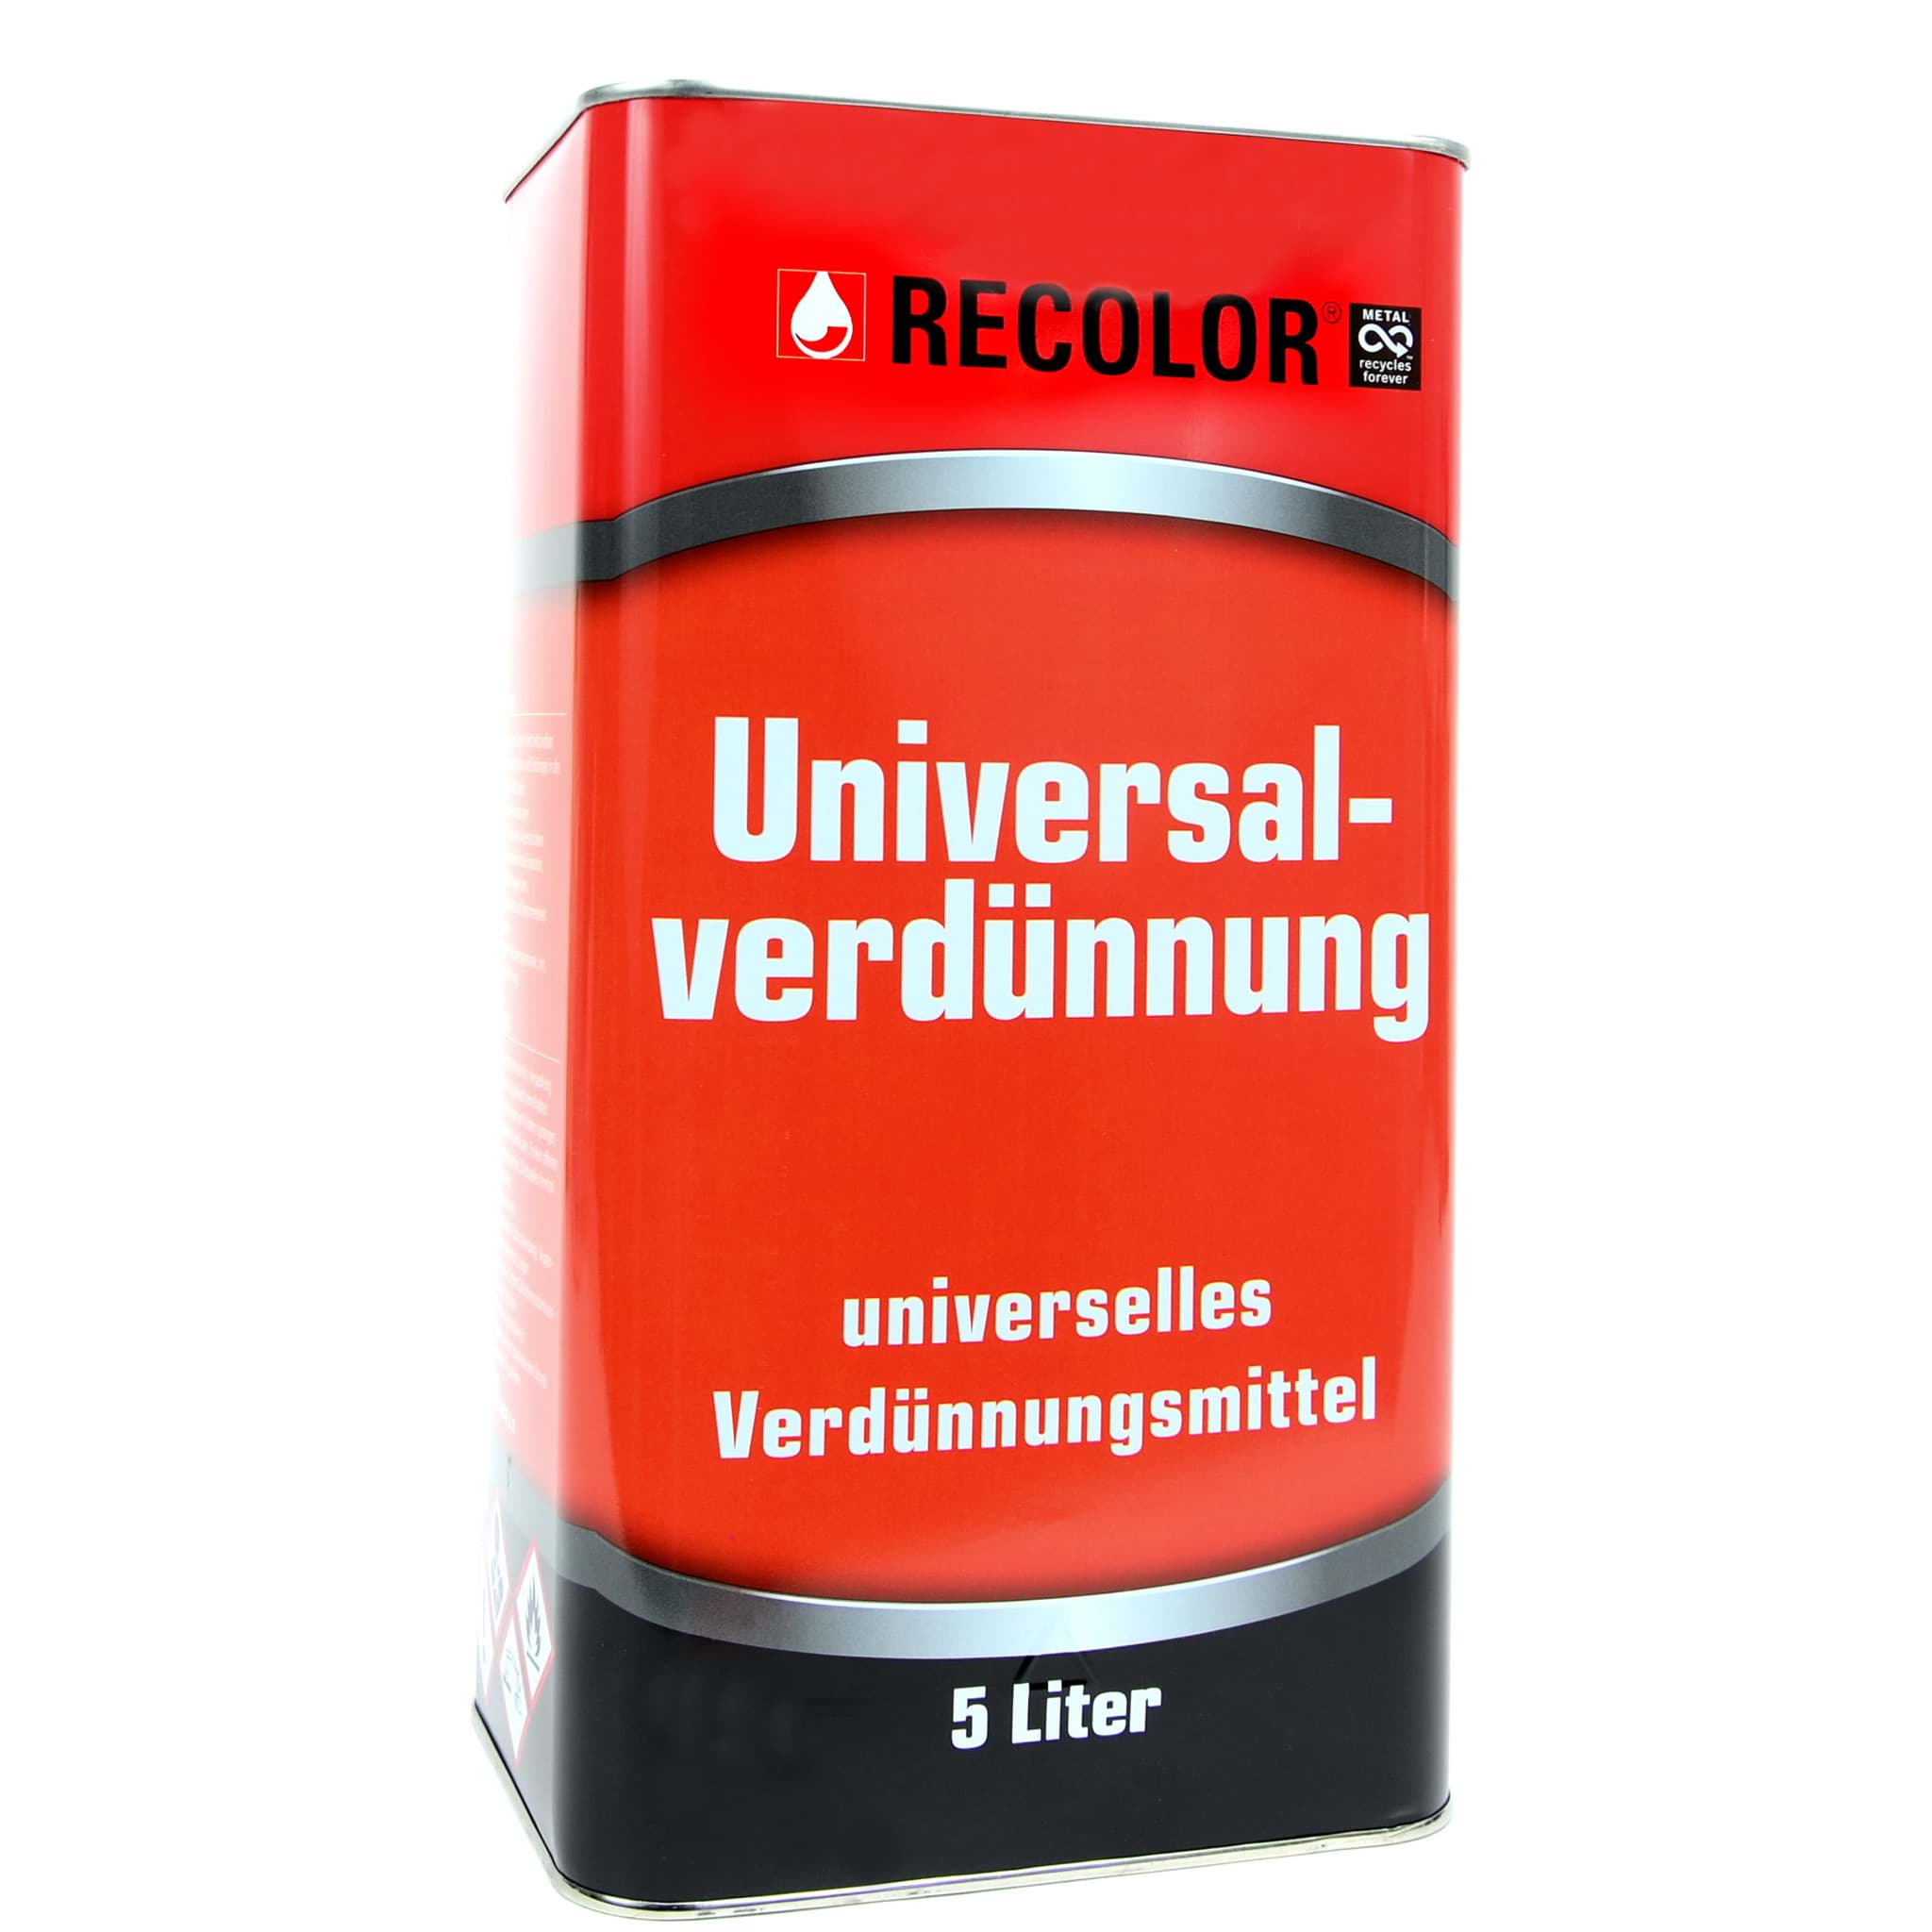 Recolor Universalverdünnung 5 Liter resmi